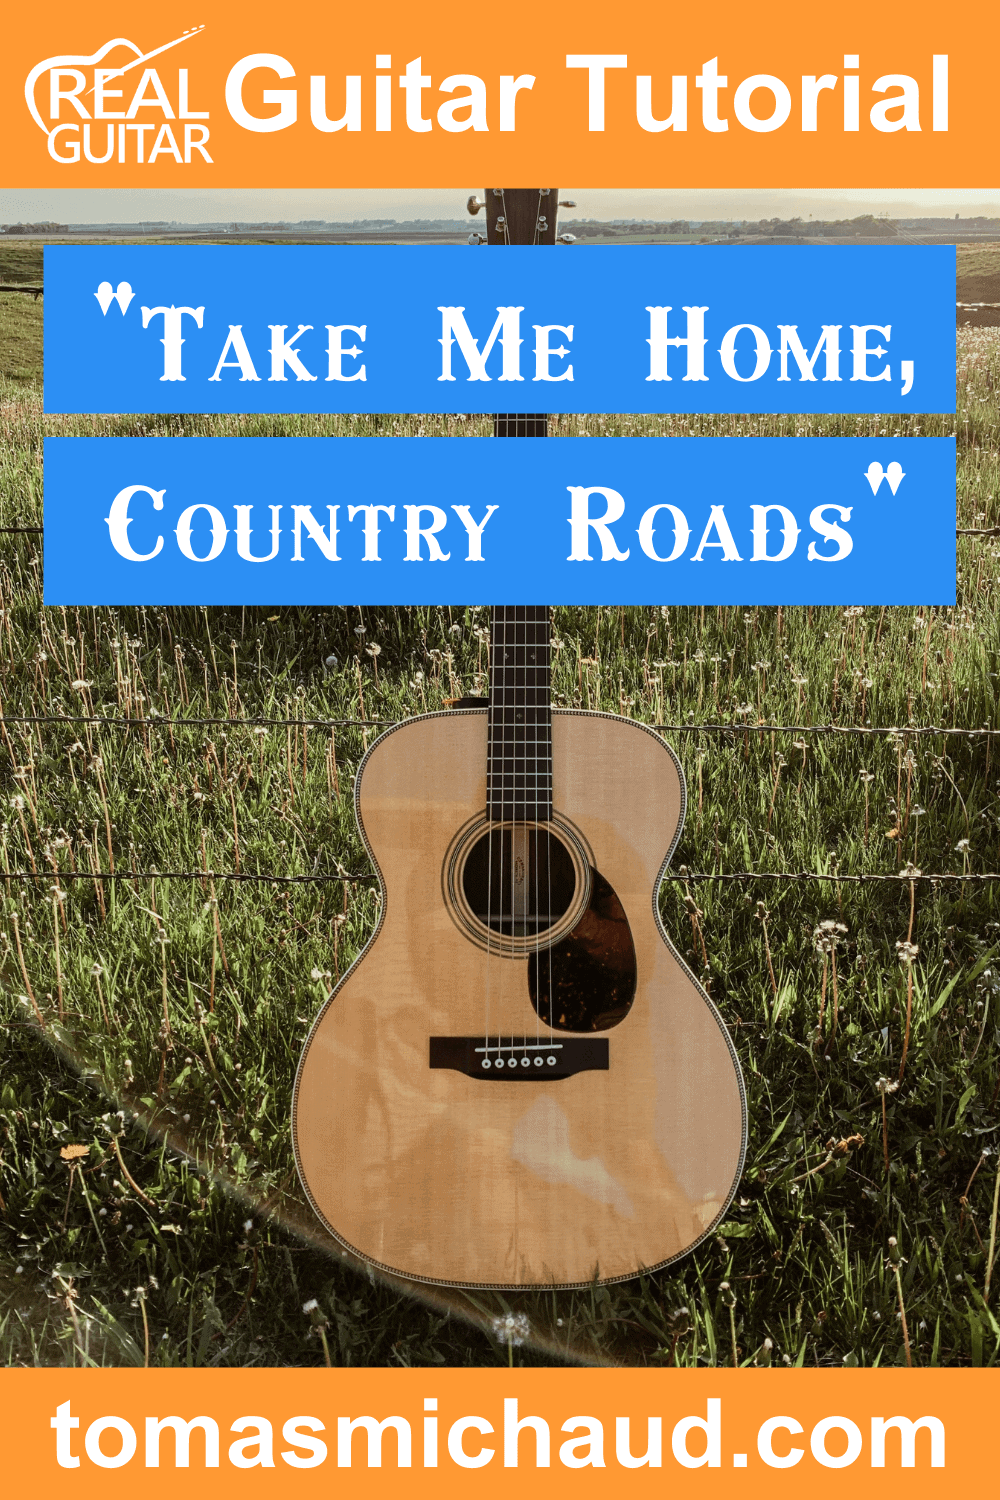 "Take Me Home, Country Roads"